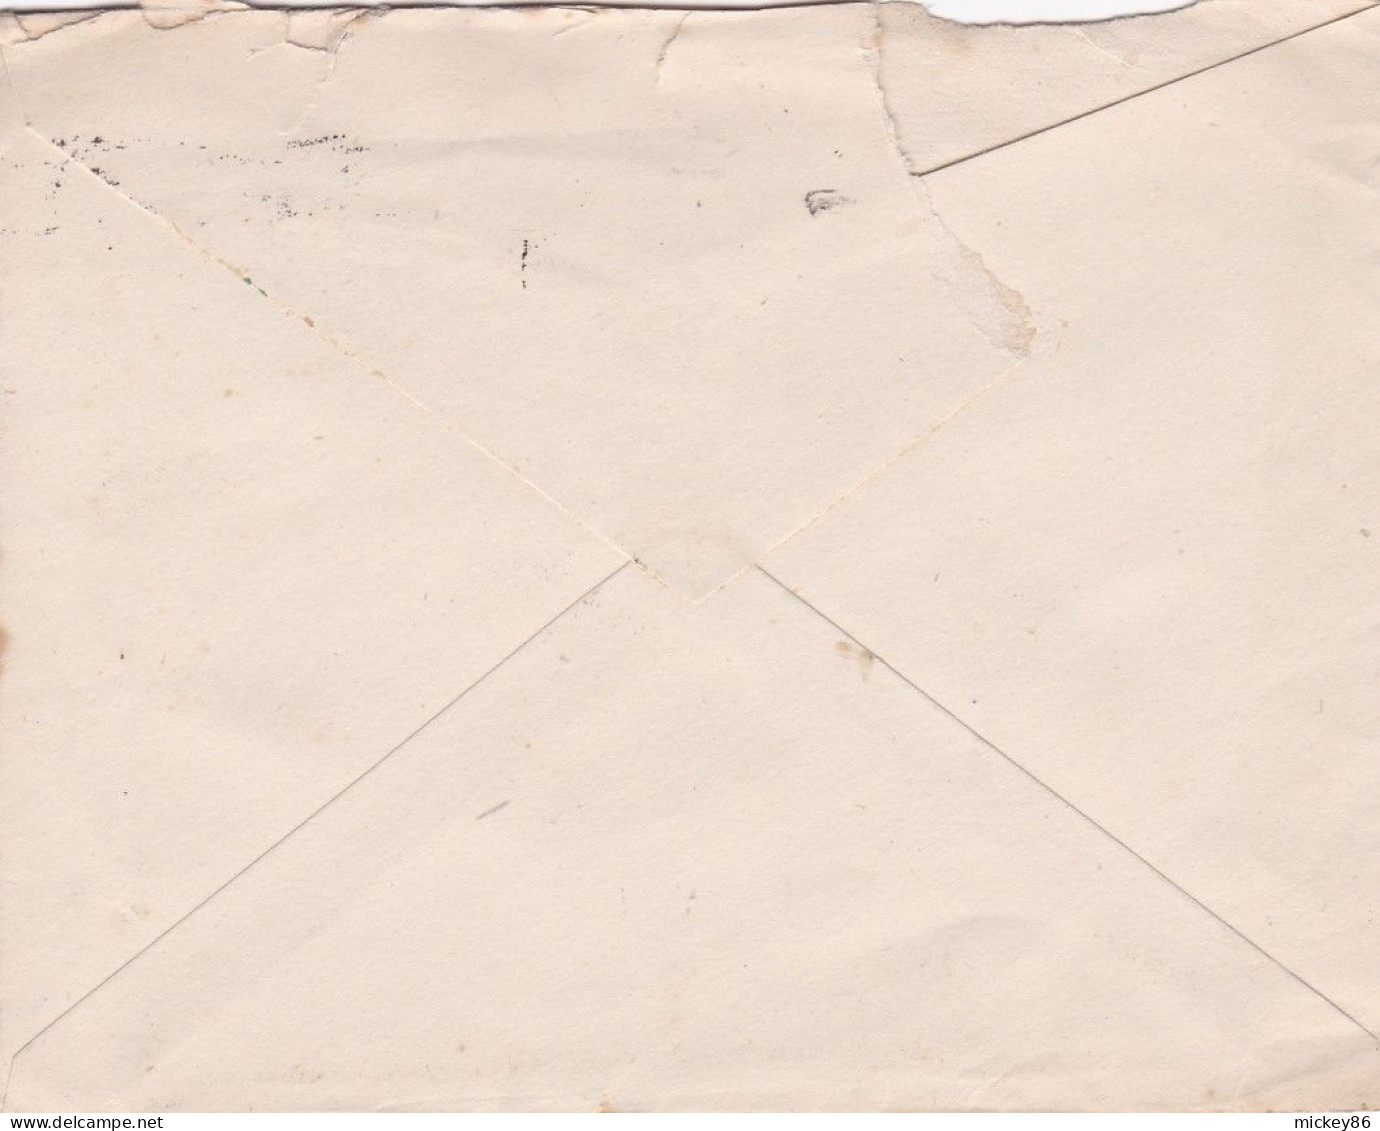 G-B-1950--- Lettre  WALTHAM CROSS  Pour Soissons-02 (France)-timbres ,cachet  Date  7-5 -1950-- - Briefe U. Dokumente